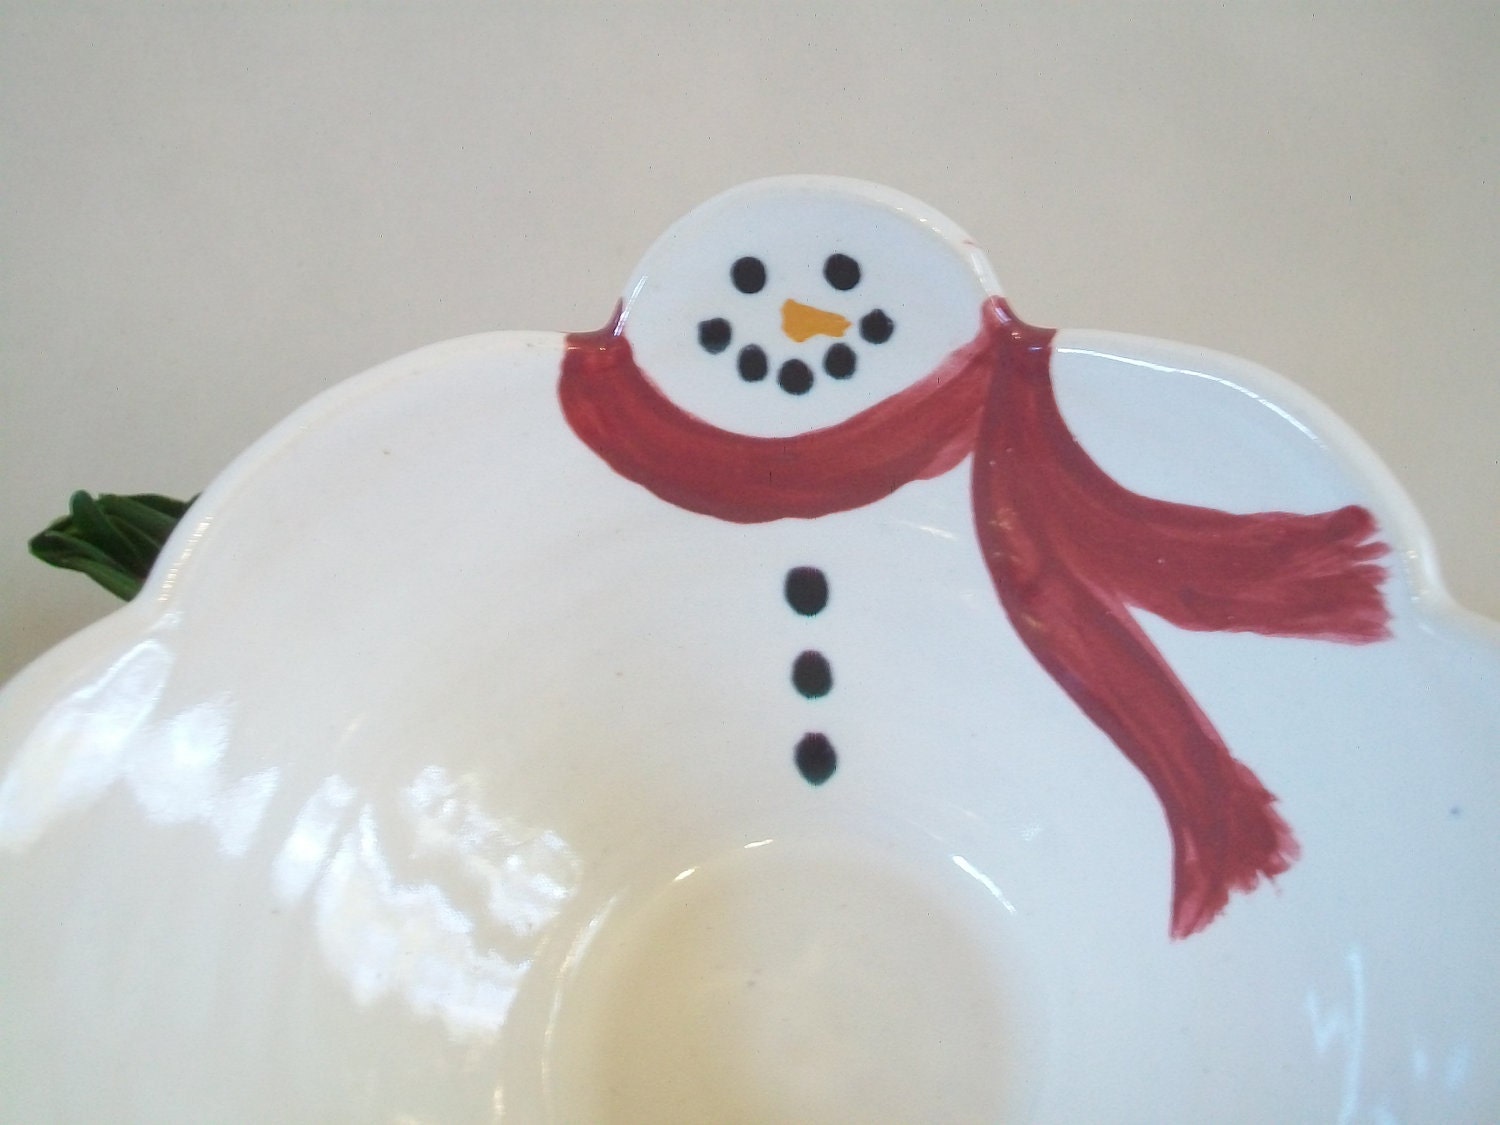 snowman diy craft with white ceramic bowlpompoms